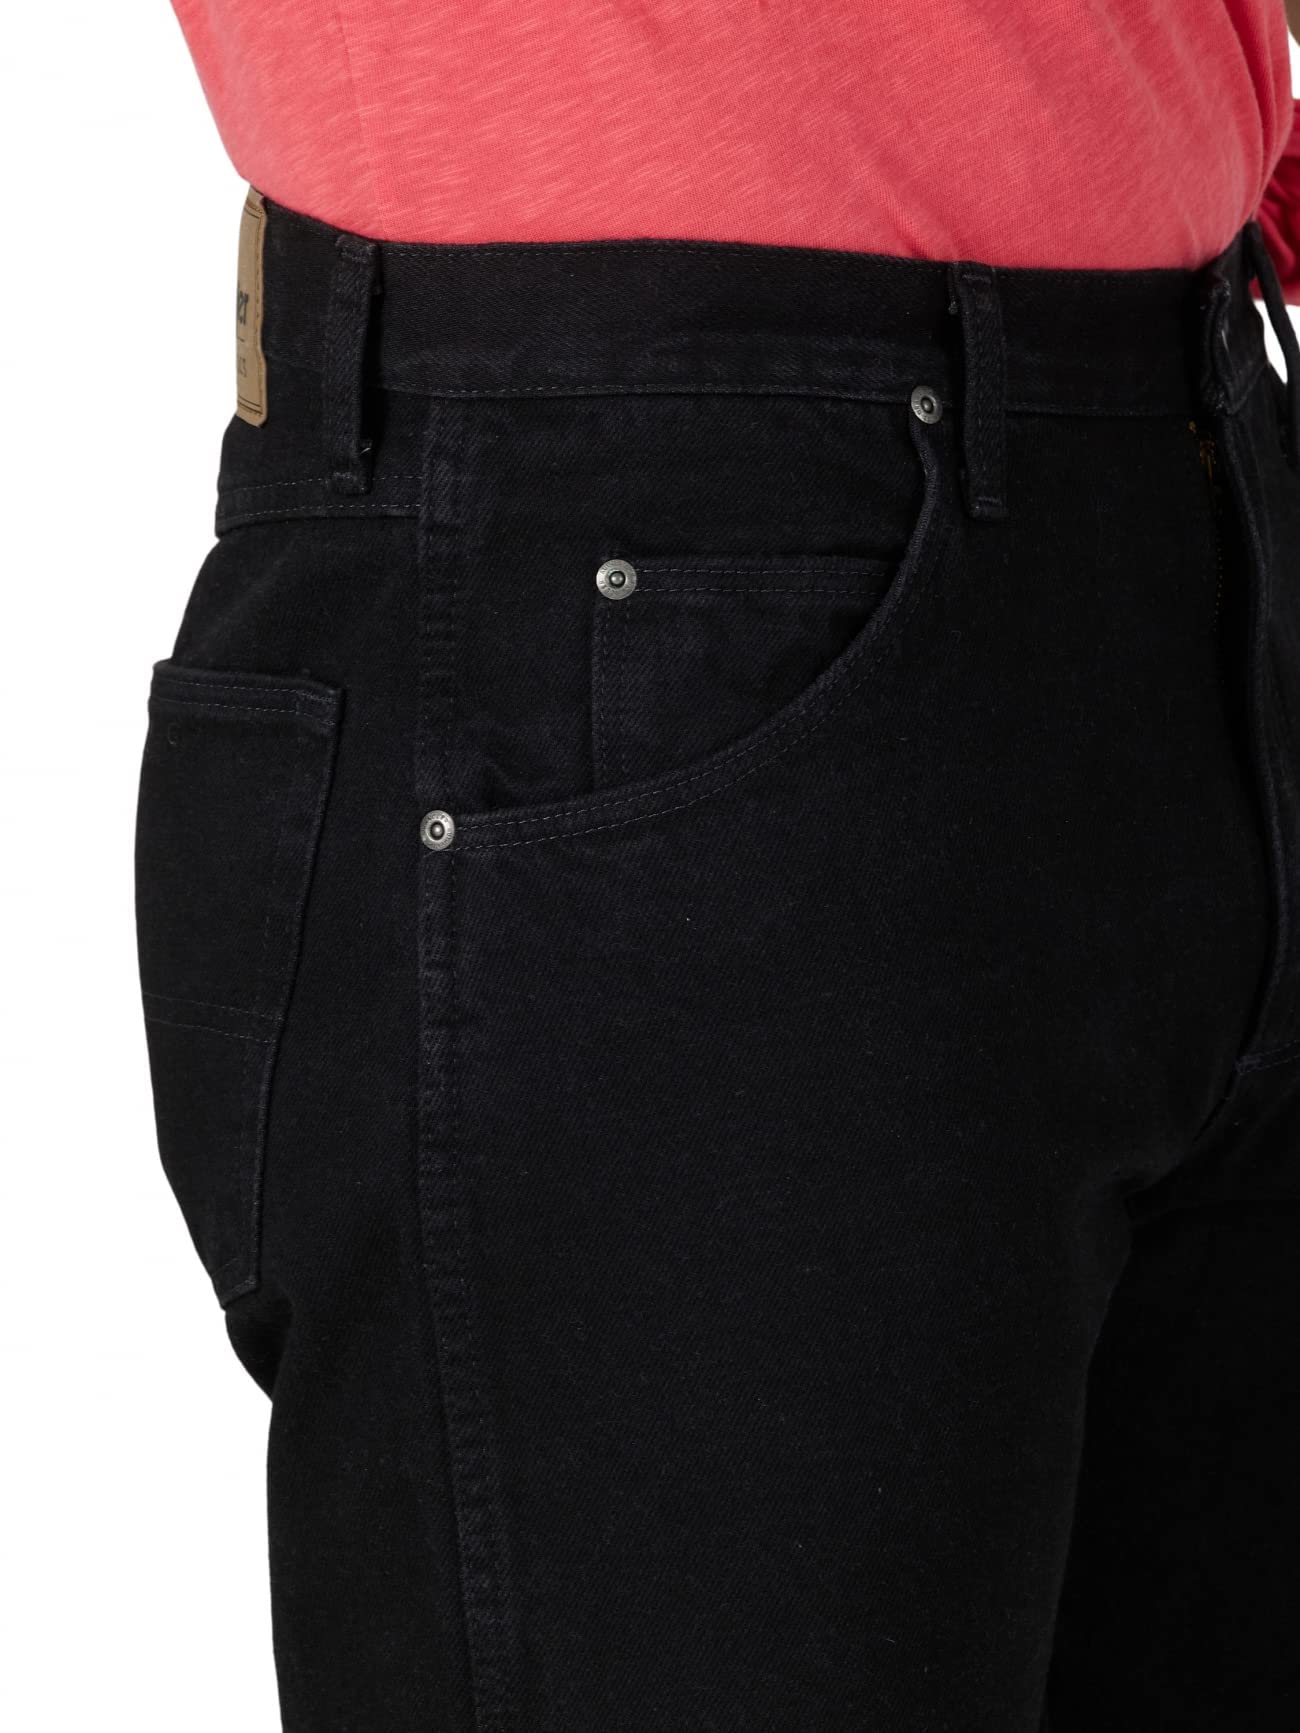 Wrangler Authentics Men's Classic 5-Pocket Regular Fit Cotton Jean, Black, 33W x 34L